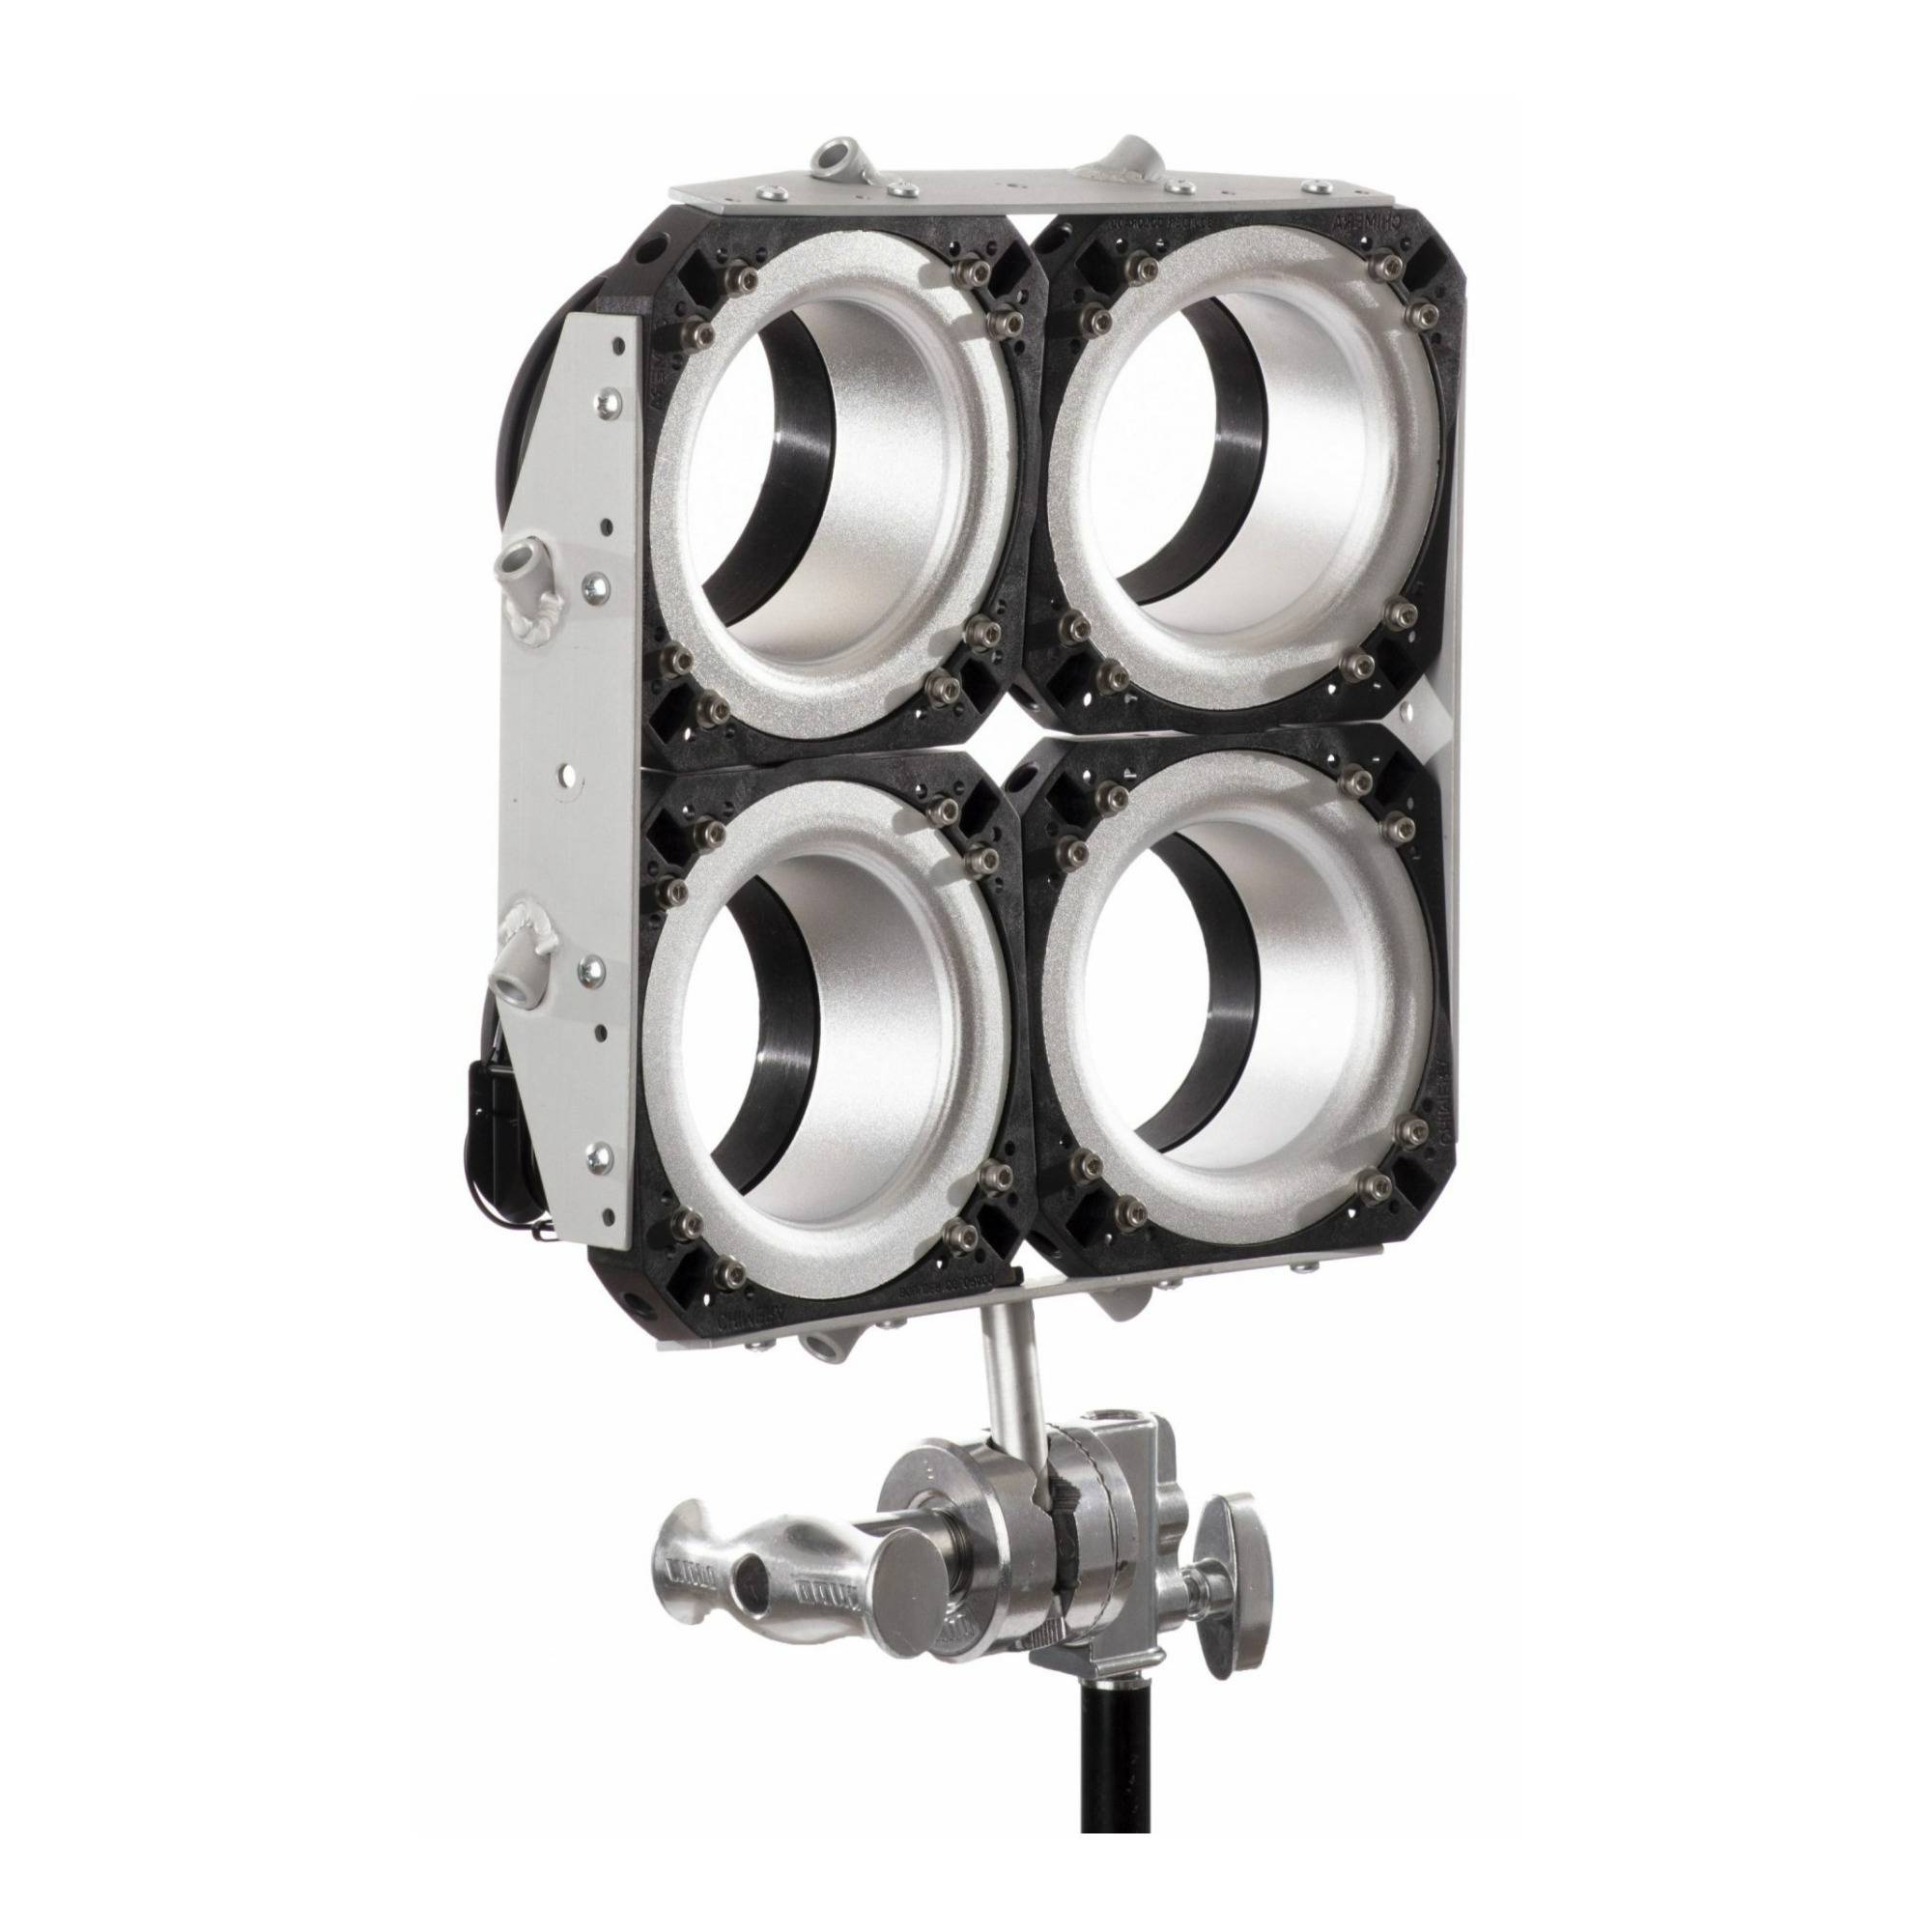 Hive Lighting CX/C-Series Quad Bracket